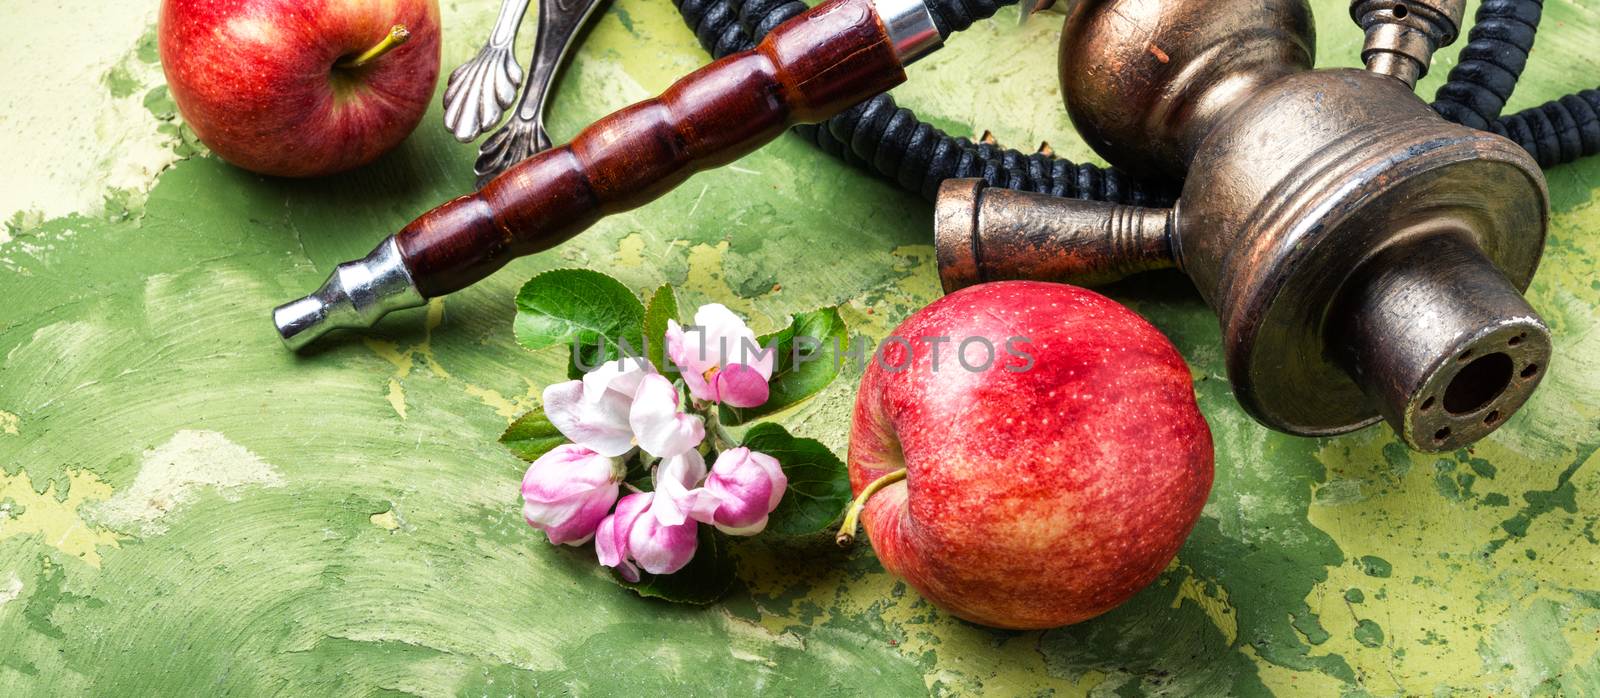 Arabian shisha with apple tobacco by LMykola